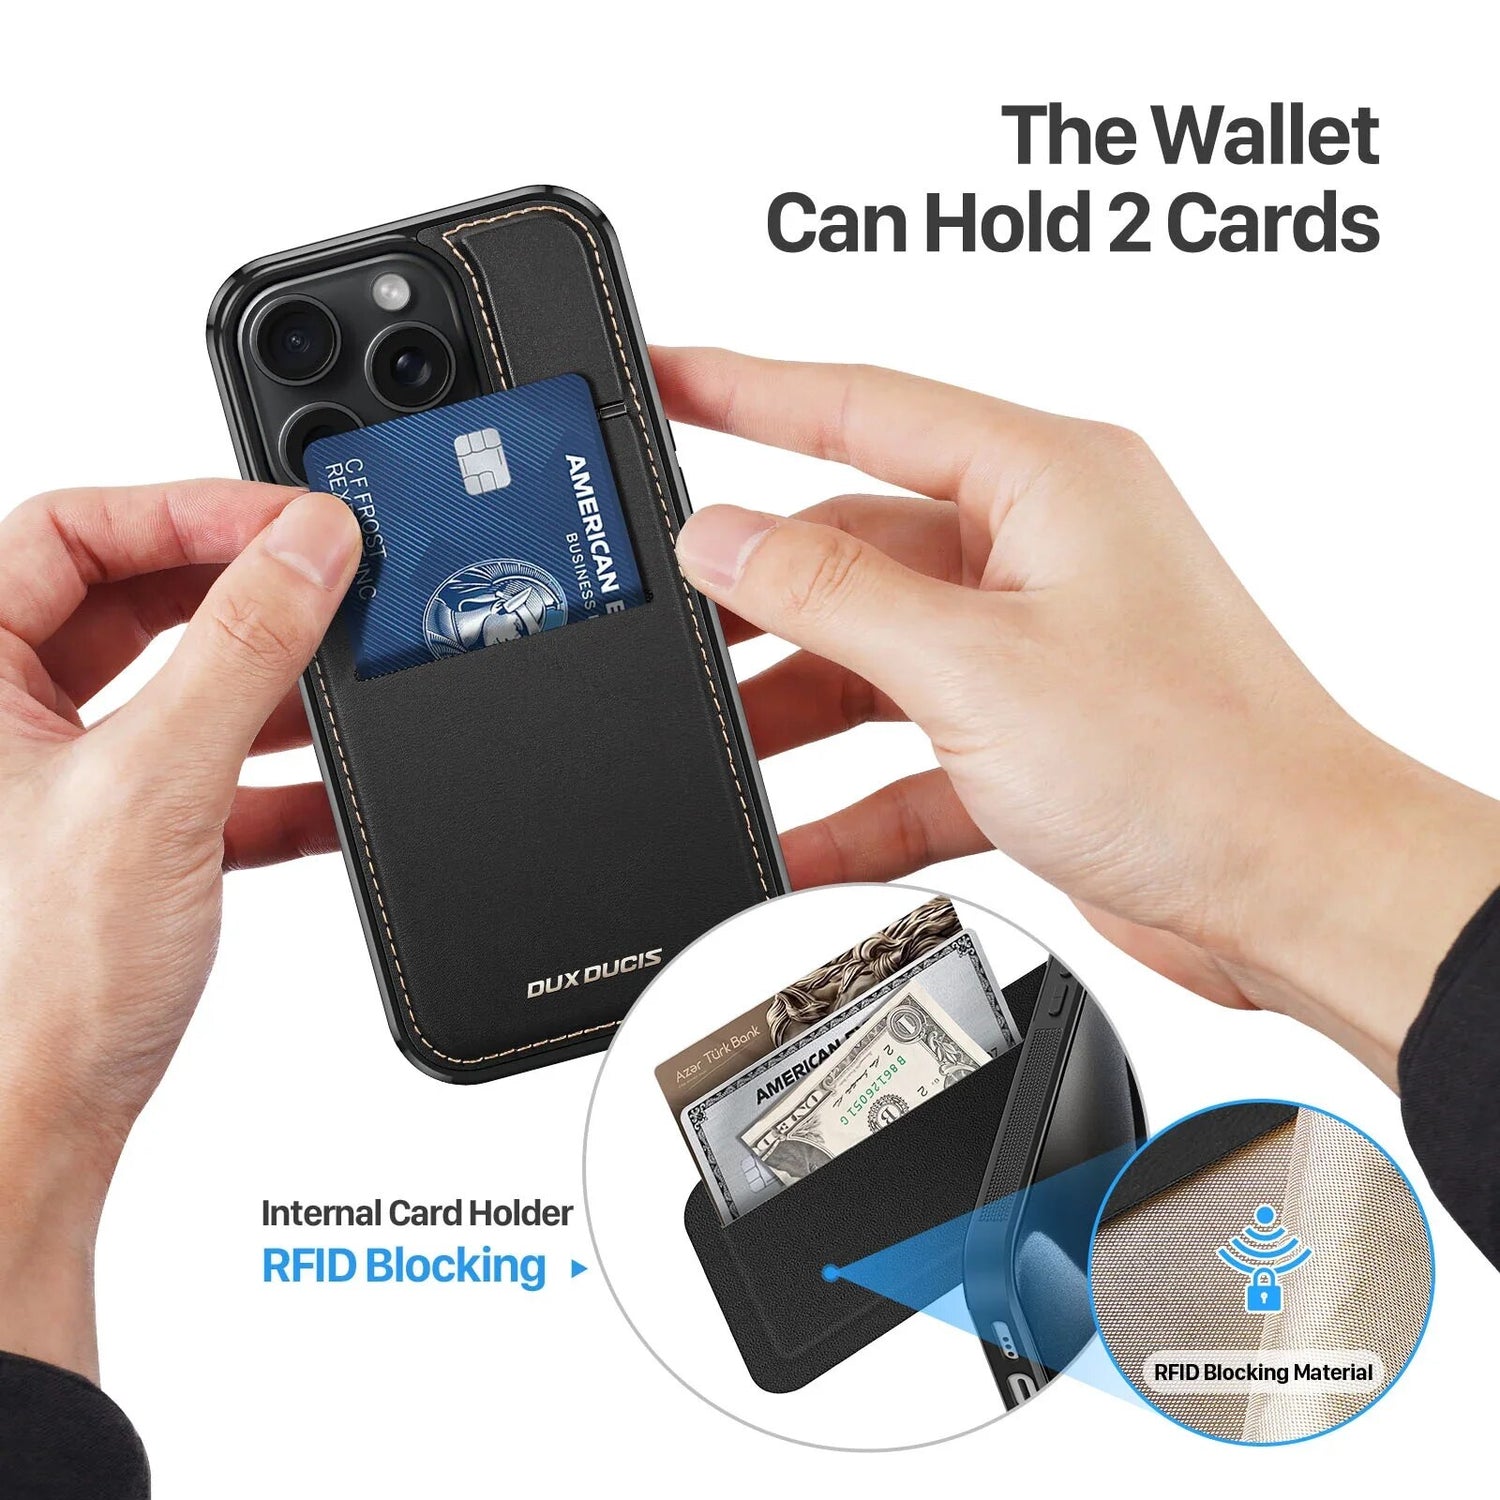 wallet case